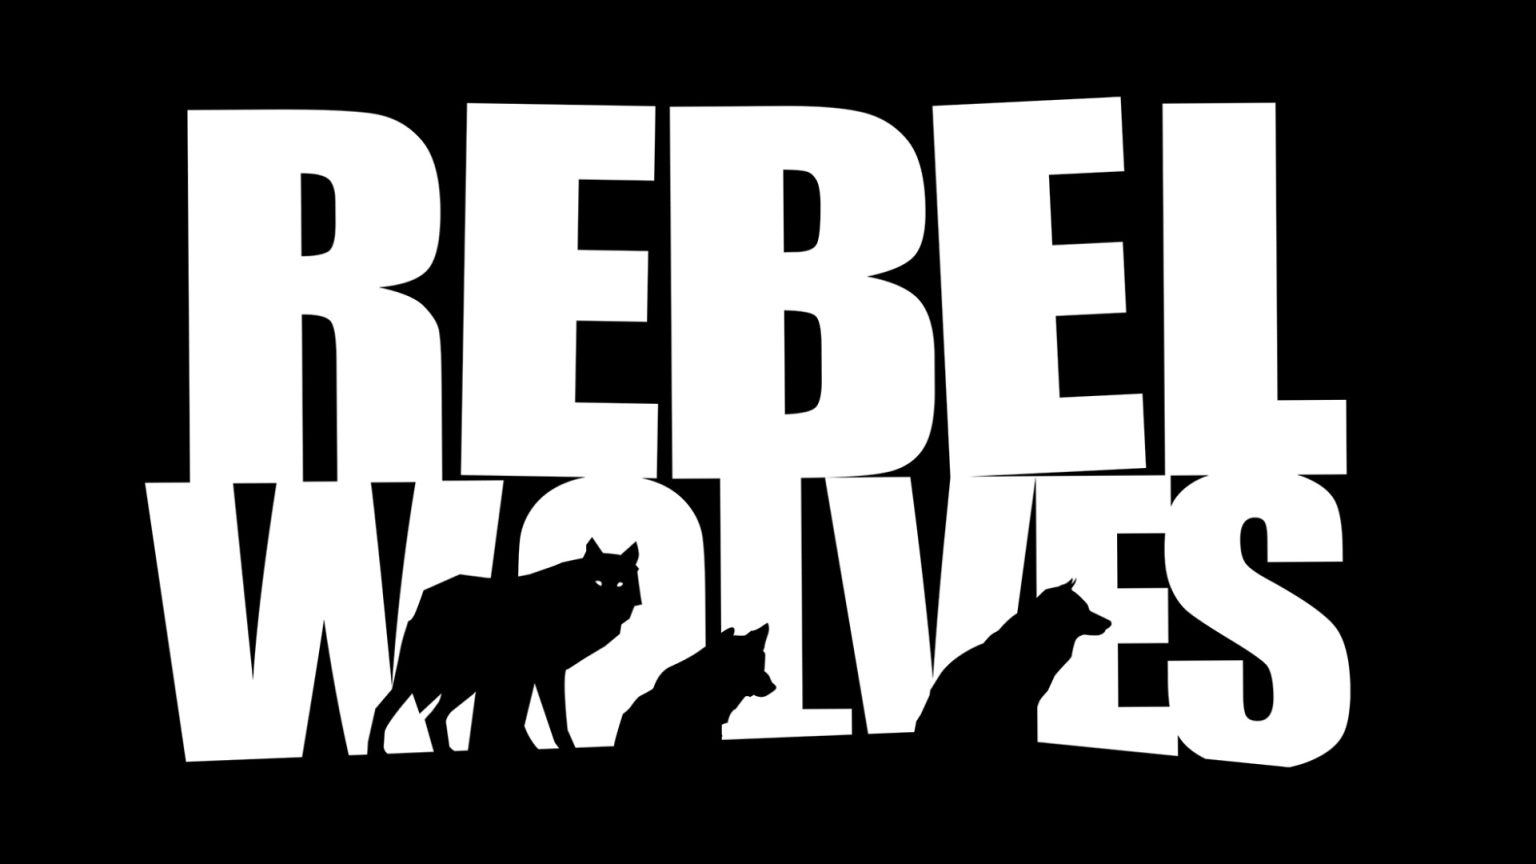 Rebel Wolves聘請《巫師3》資深人士為創意總監 3A奇幻RPG開發中